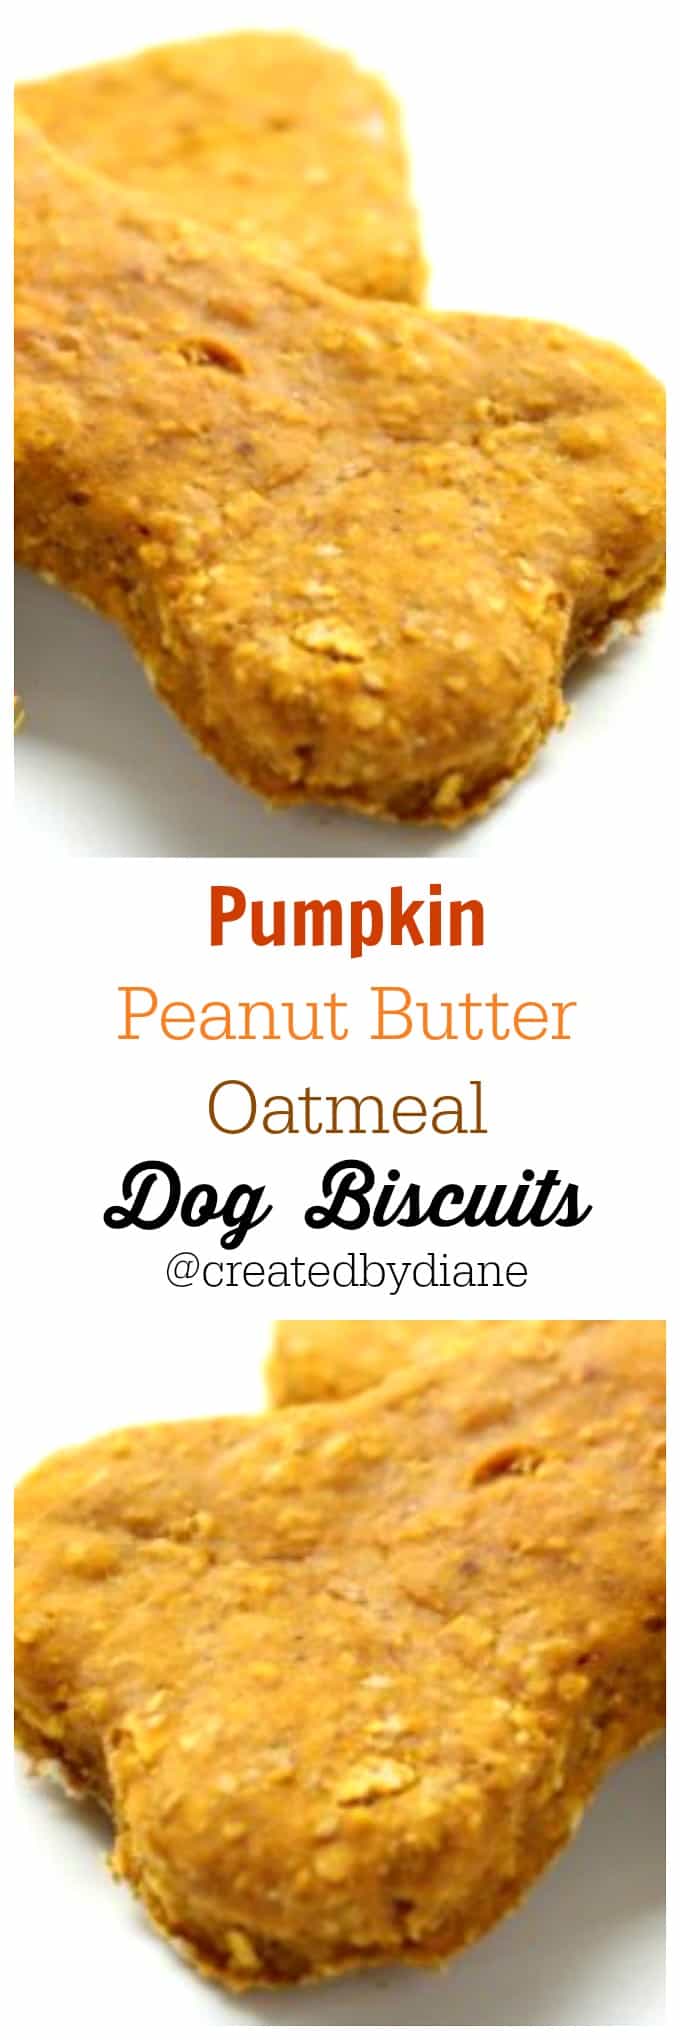 pumpkin peanut butter oatmeal dog biscuits @createdbydiane